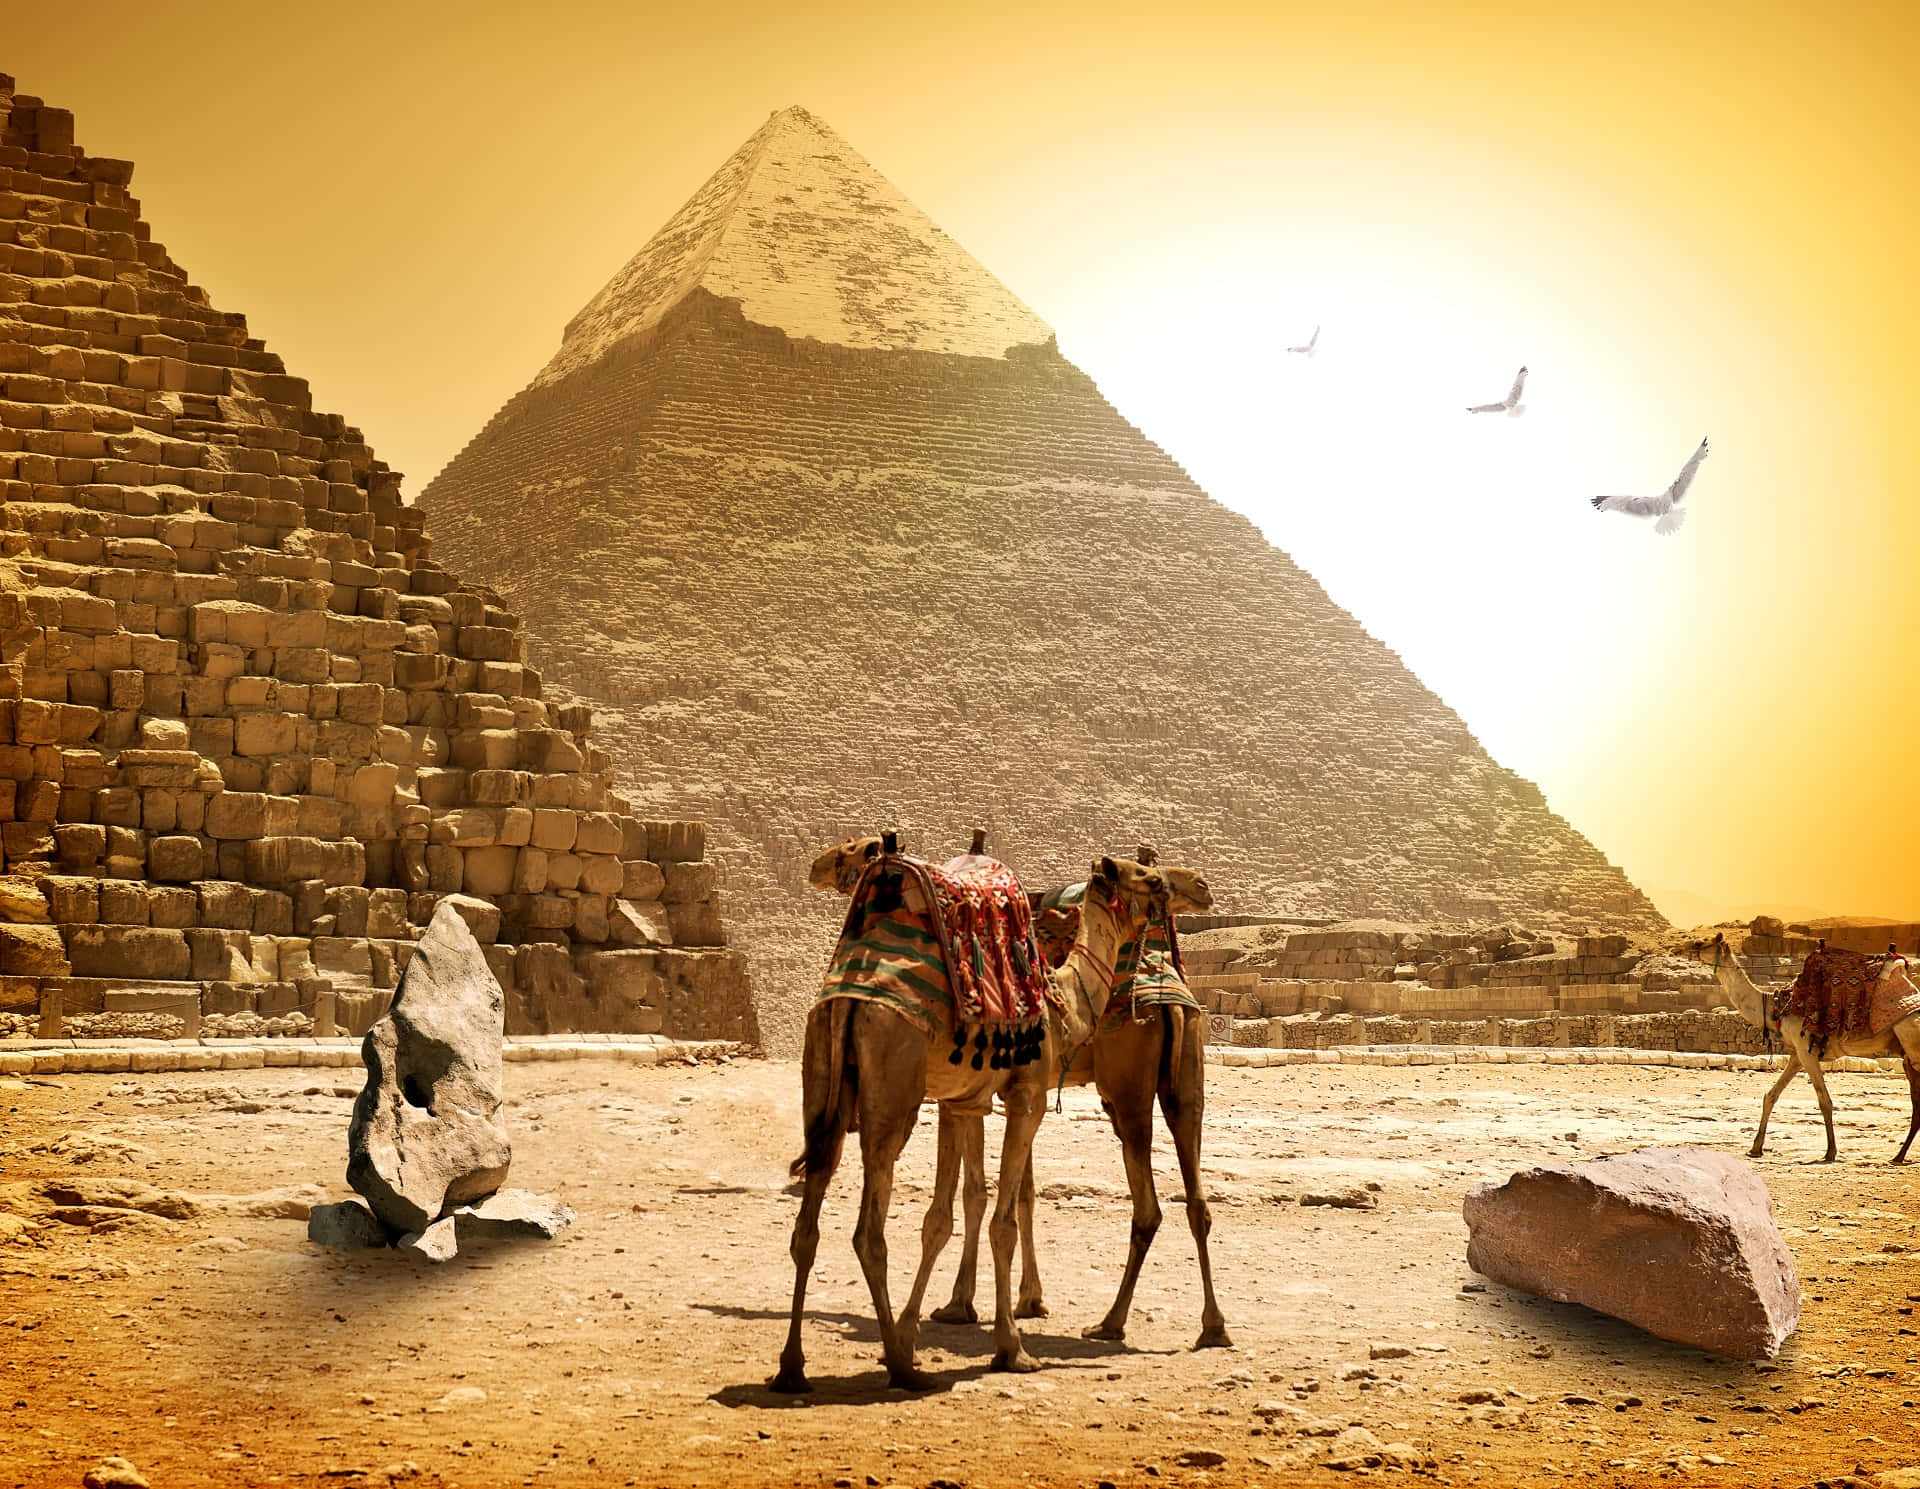 Magnificent Great Sphinx, Giza Plateau, Egypt